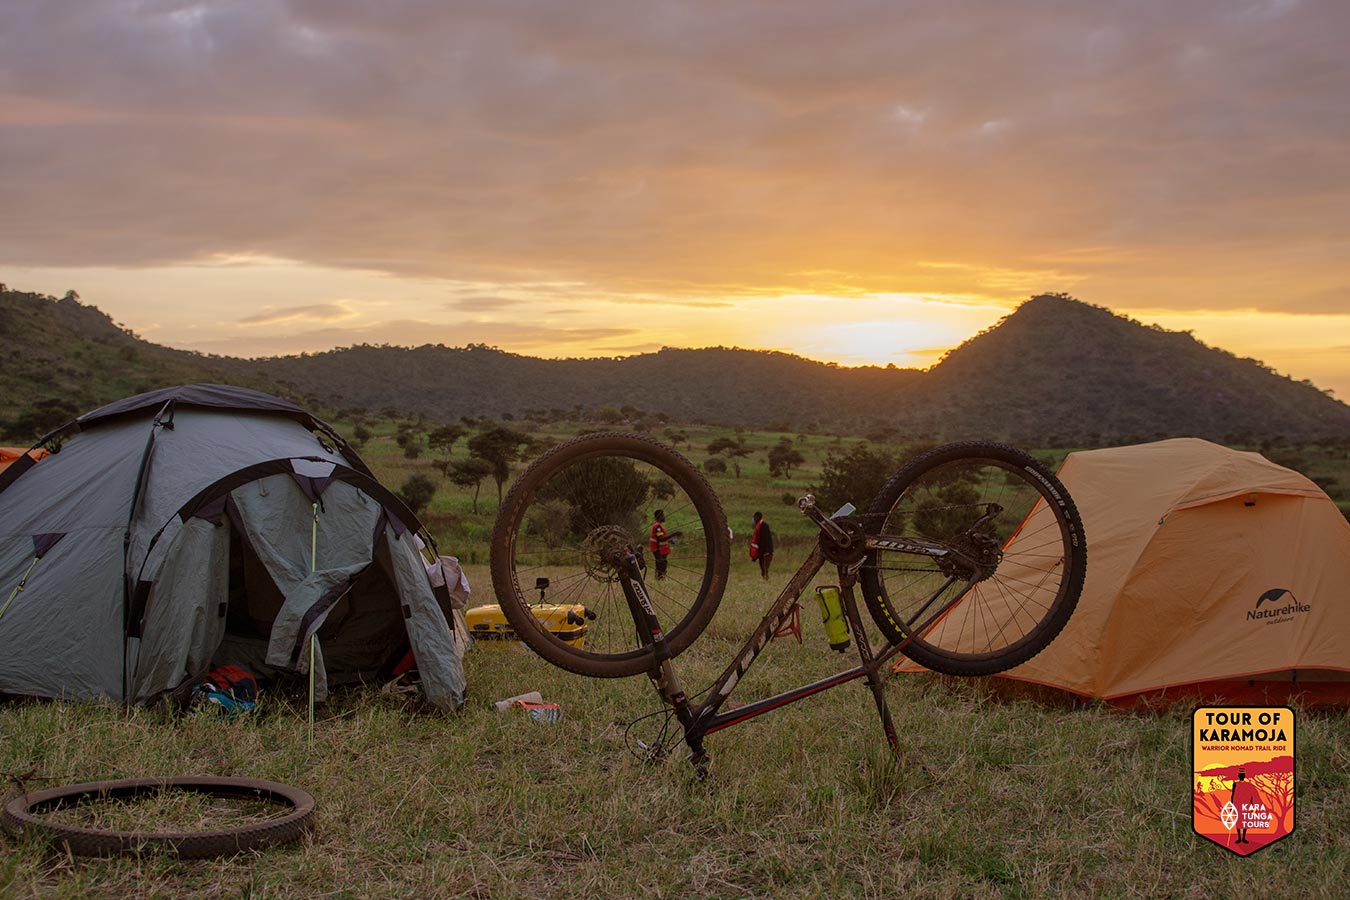 kara-tunga-tour-of-karamoja-uganda-africa-warrior-nomad-trail-bike-cycle-gravel-event-2